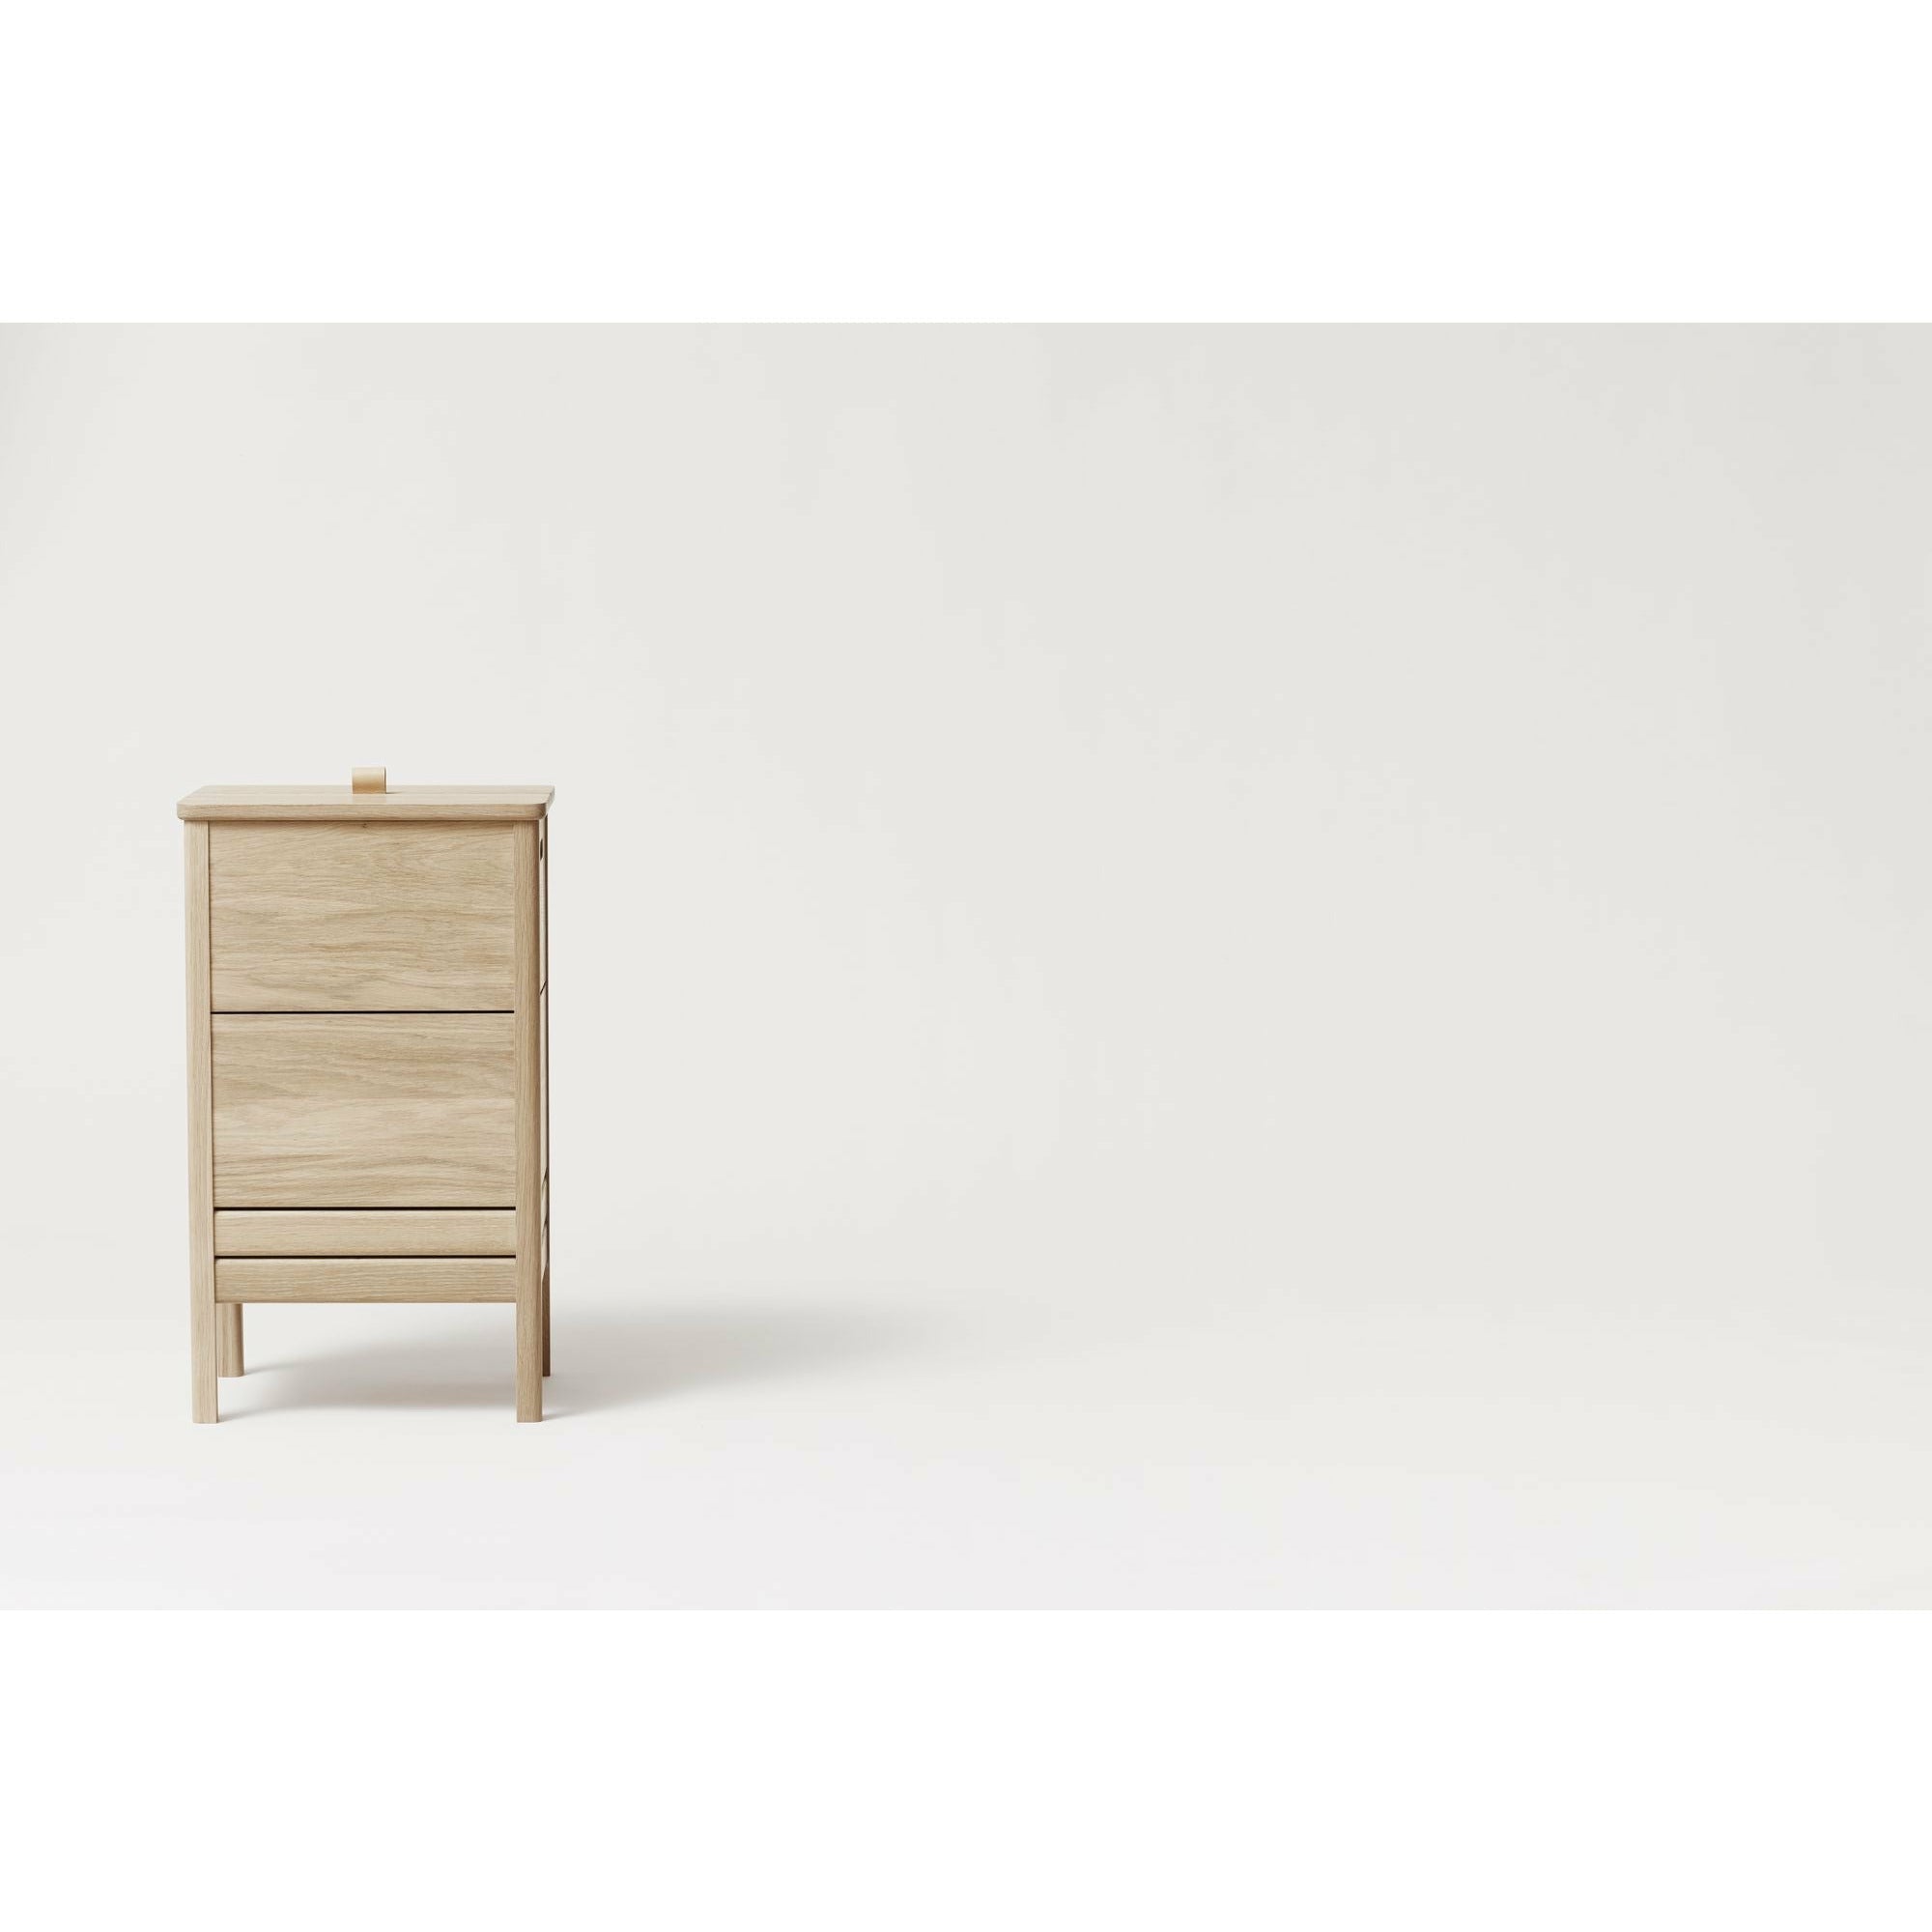 Form & Refine A Line Laundry Box. White Oak